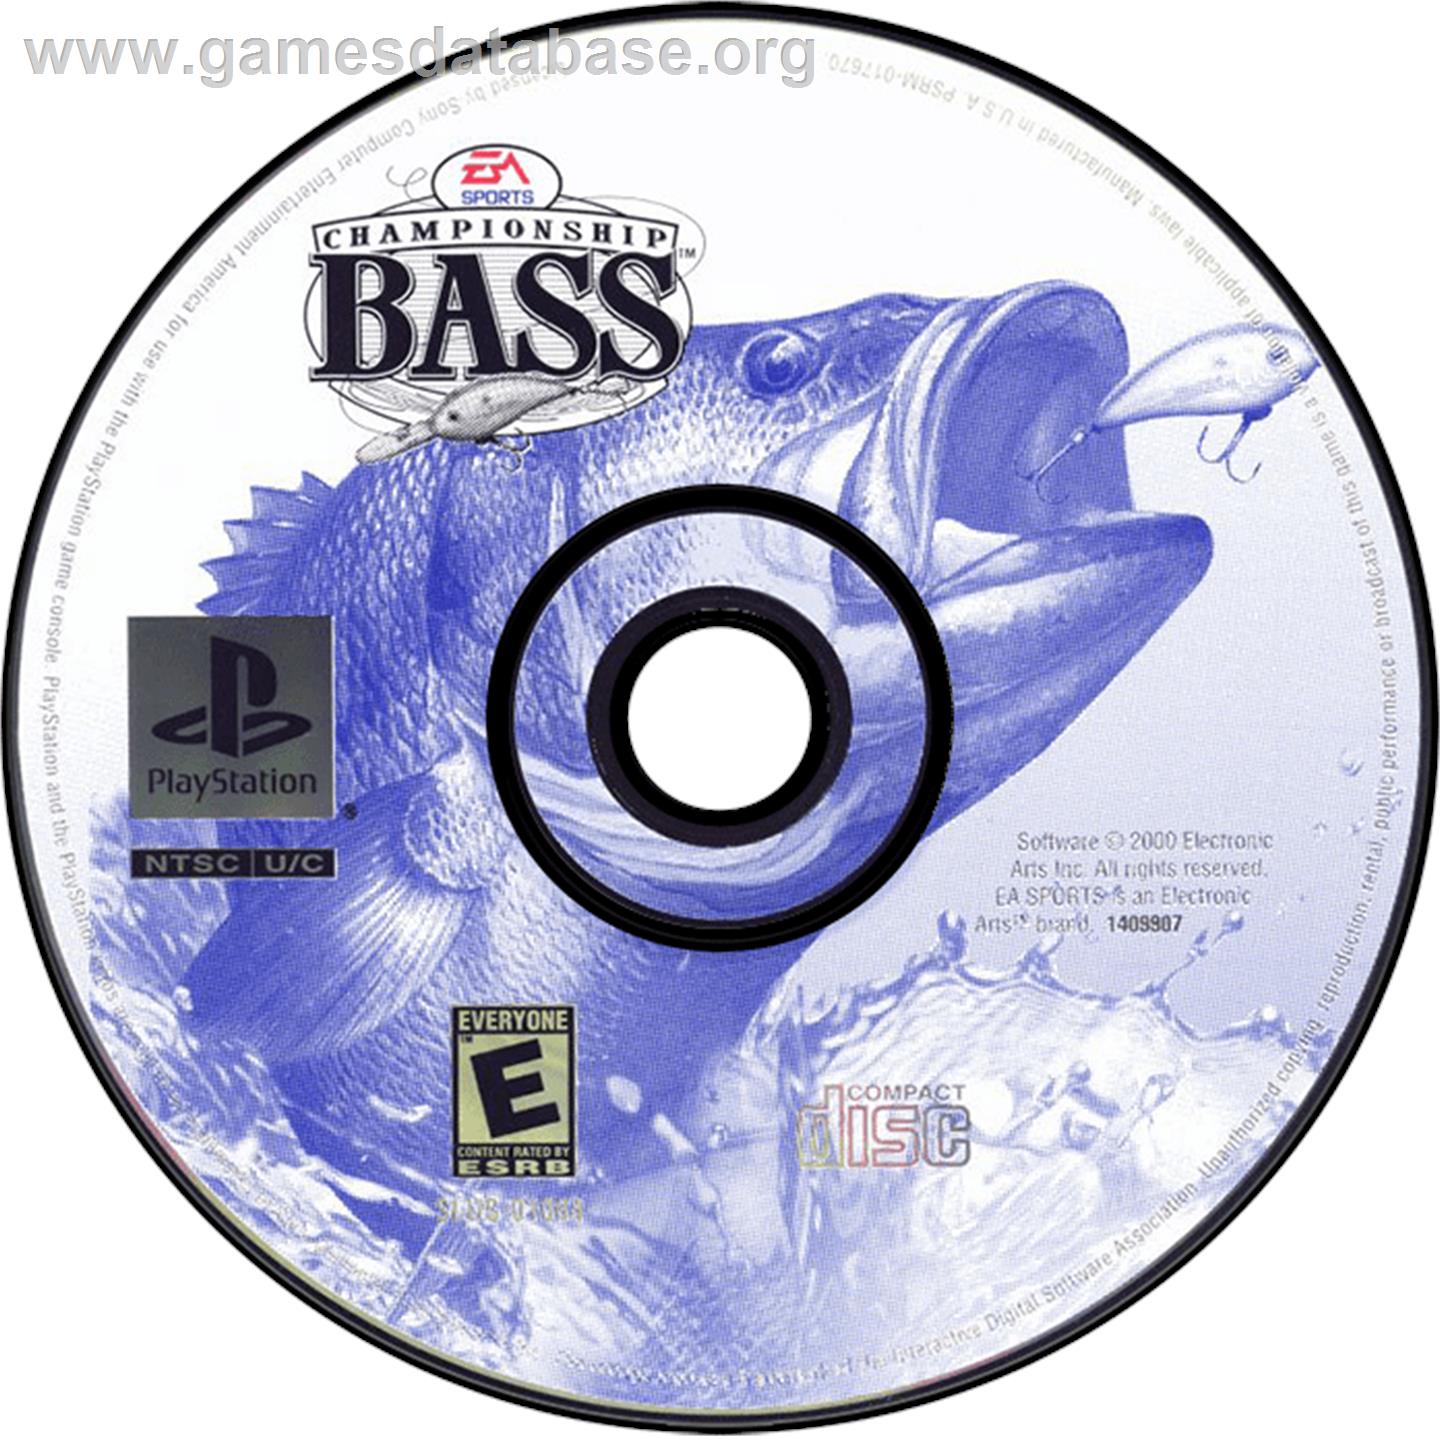 Championship Bass - Sony Playstation - Artwork - Disc